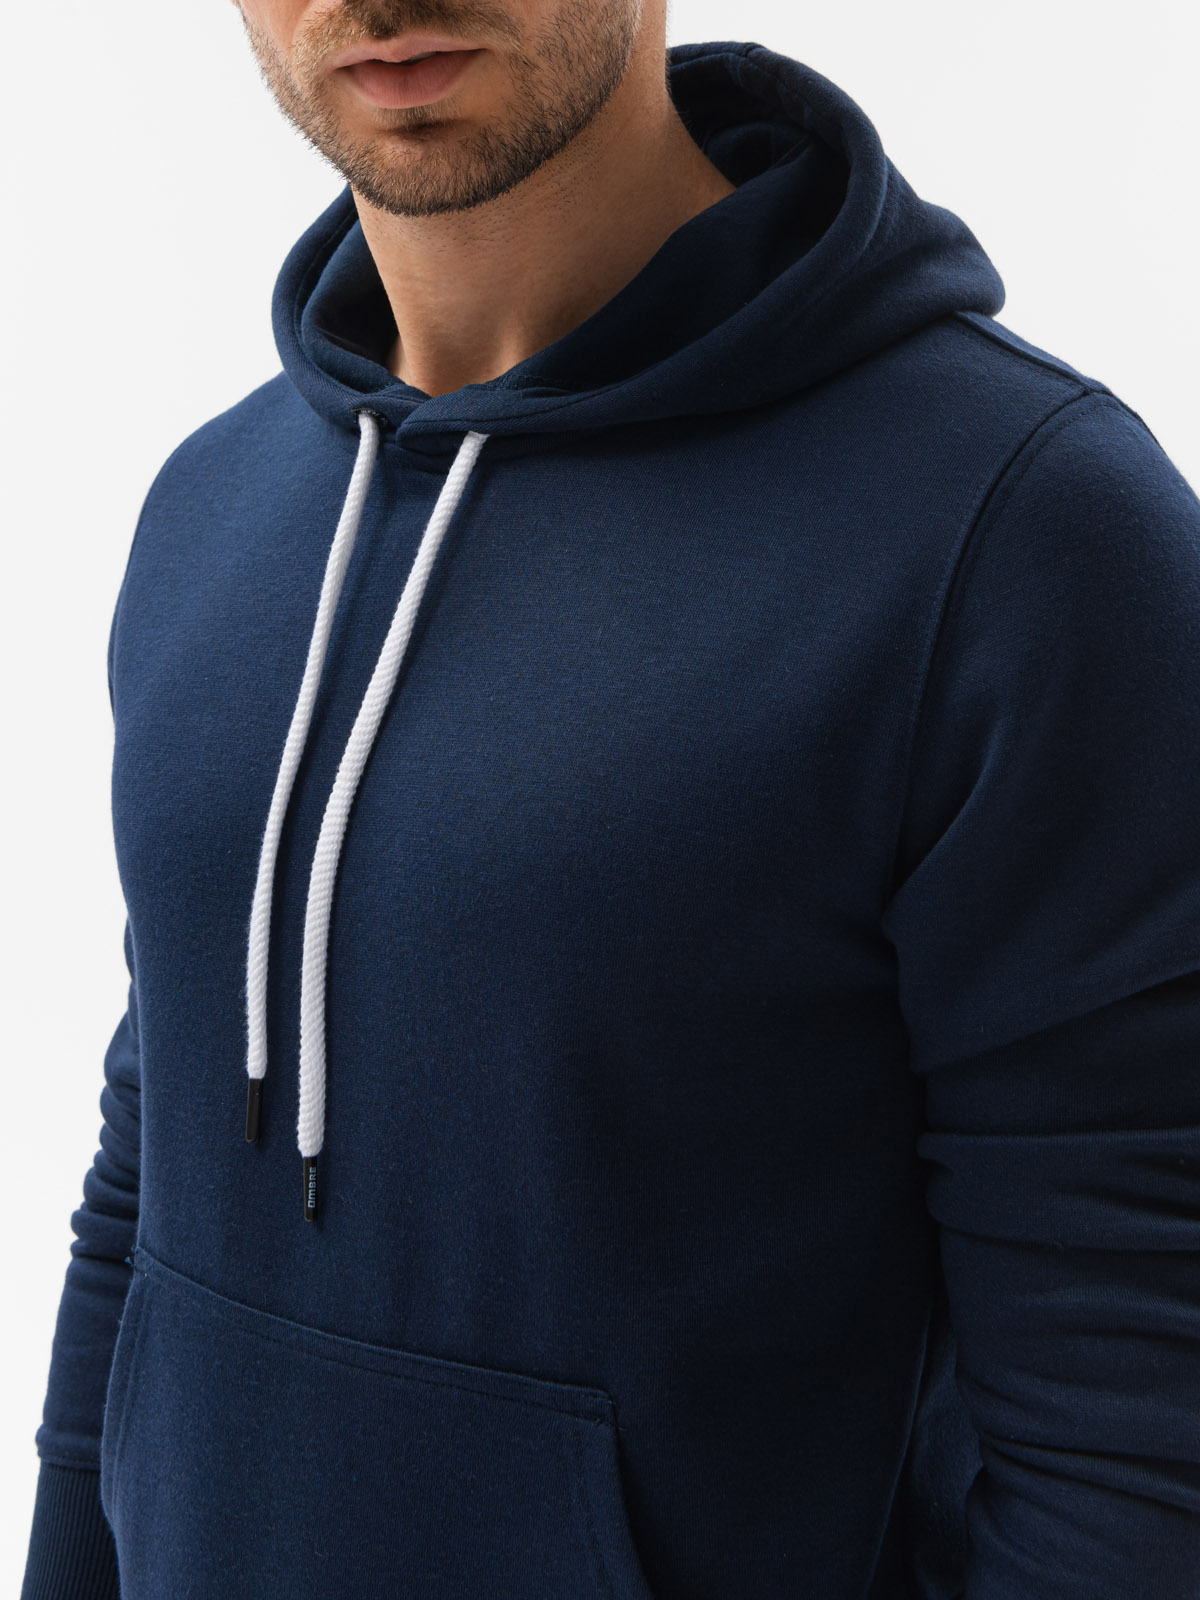 Men's hooded sweatshirt B979 - navy | MODONE wholesale - Clothing For Men